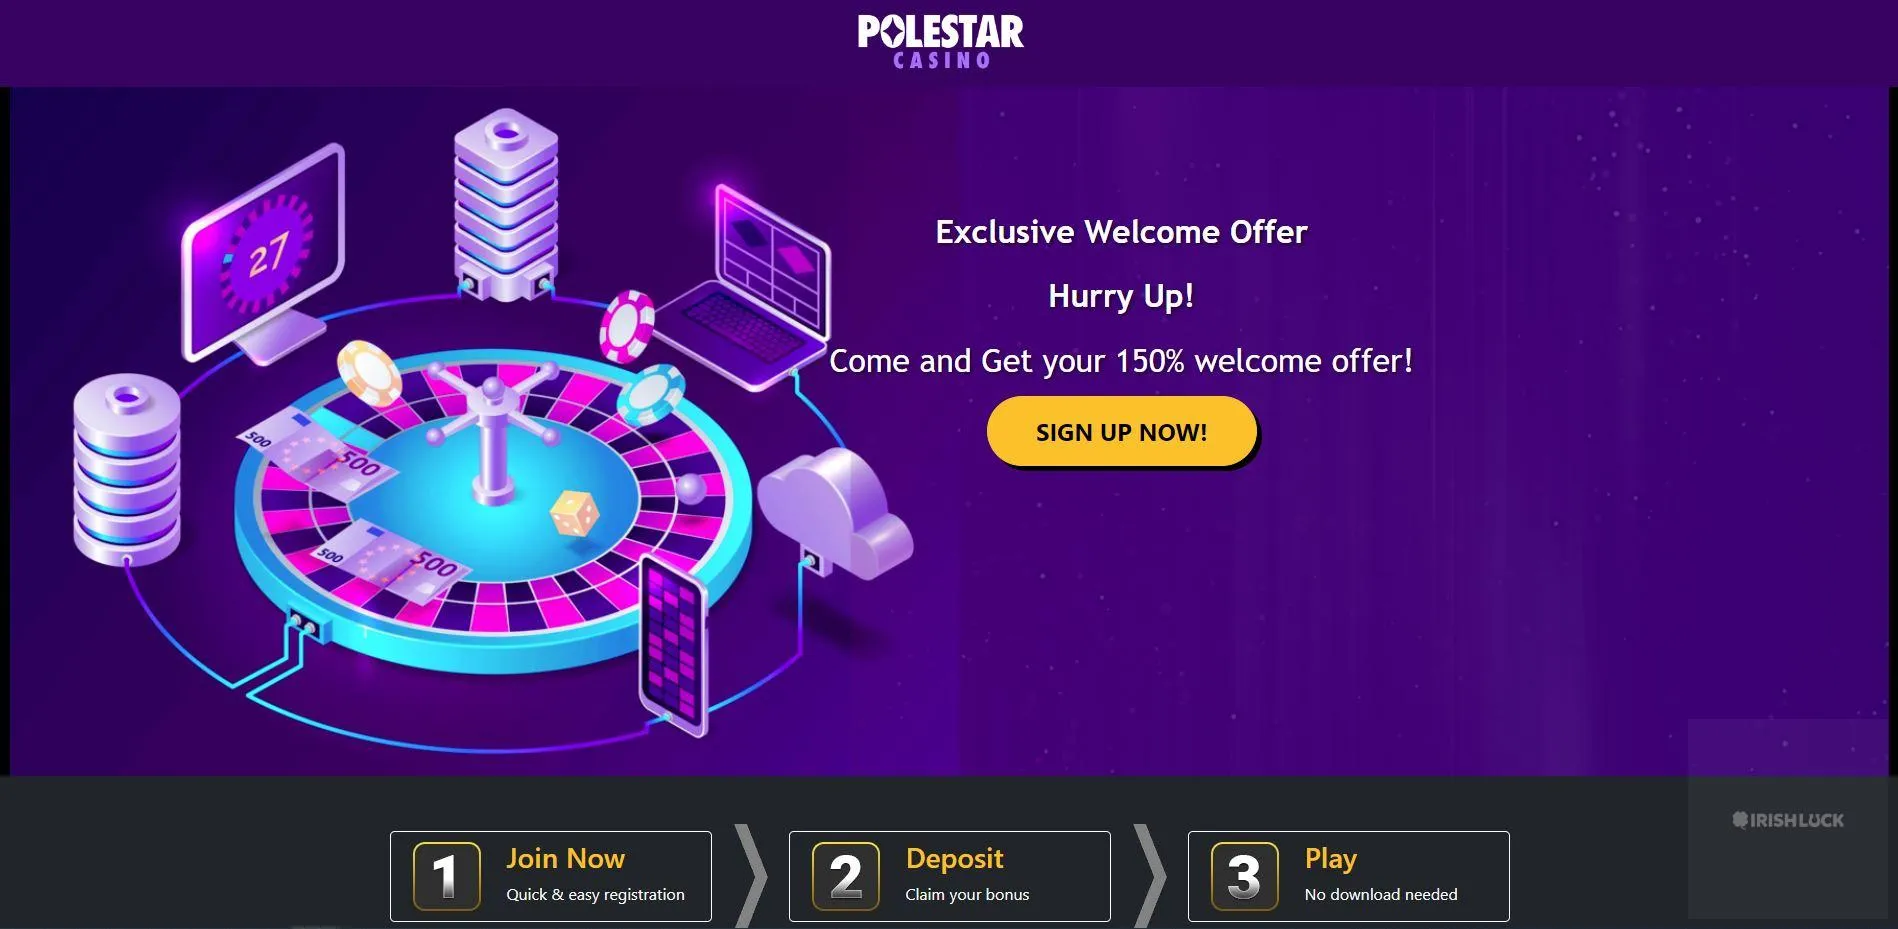 polestar casino welcome bonus ireland online casinos ireland